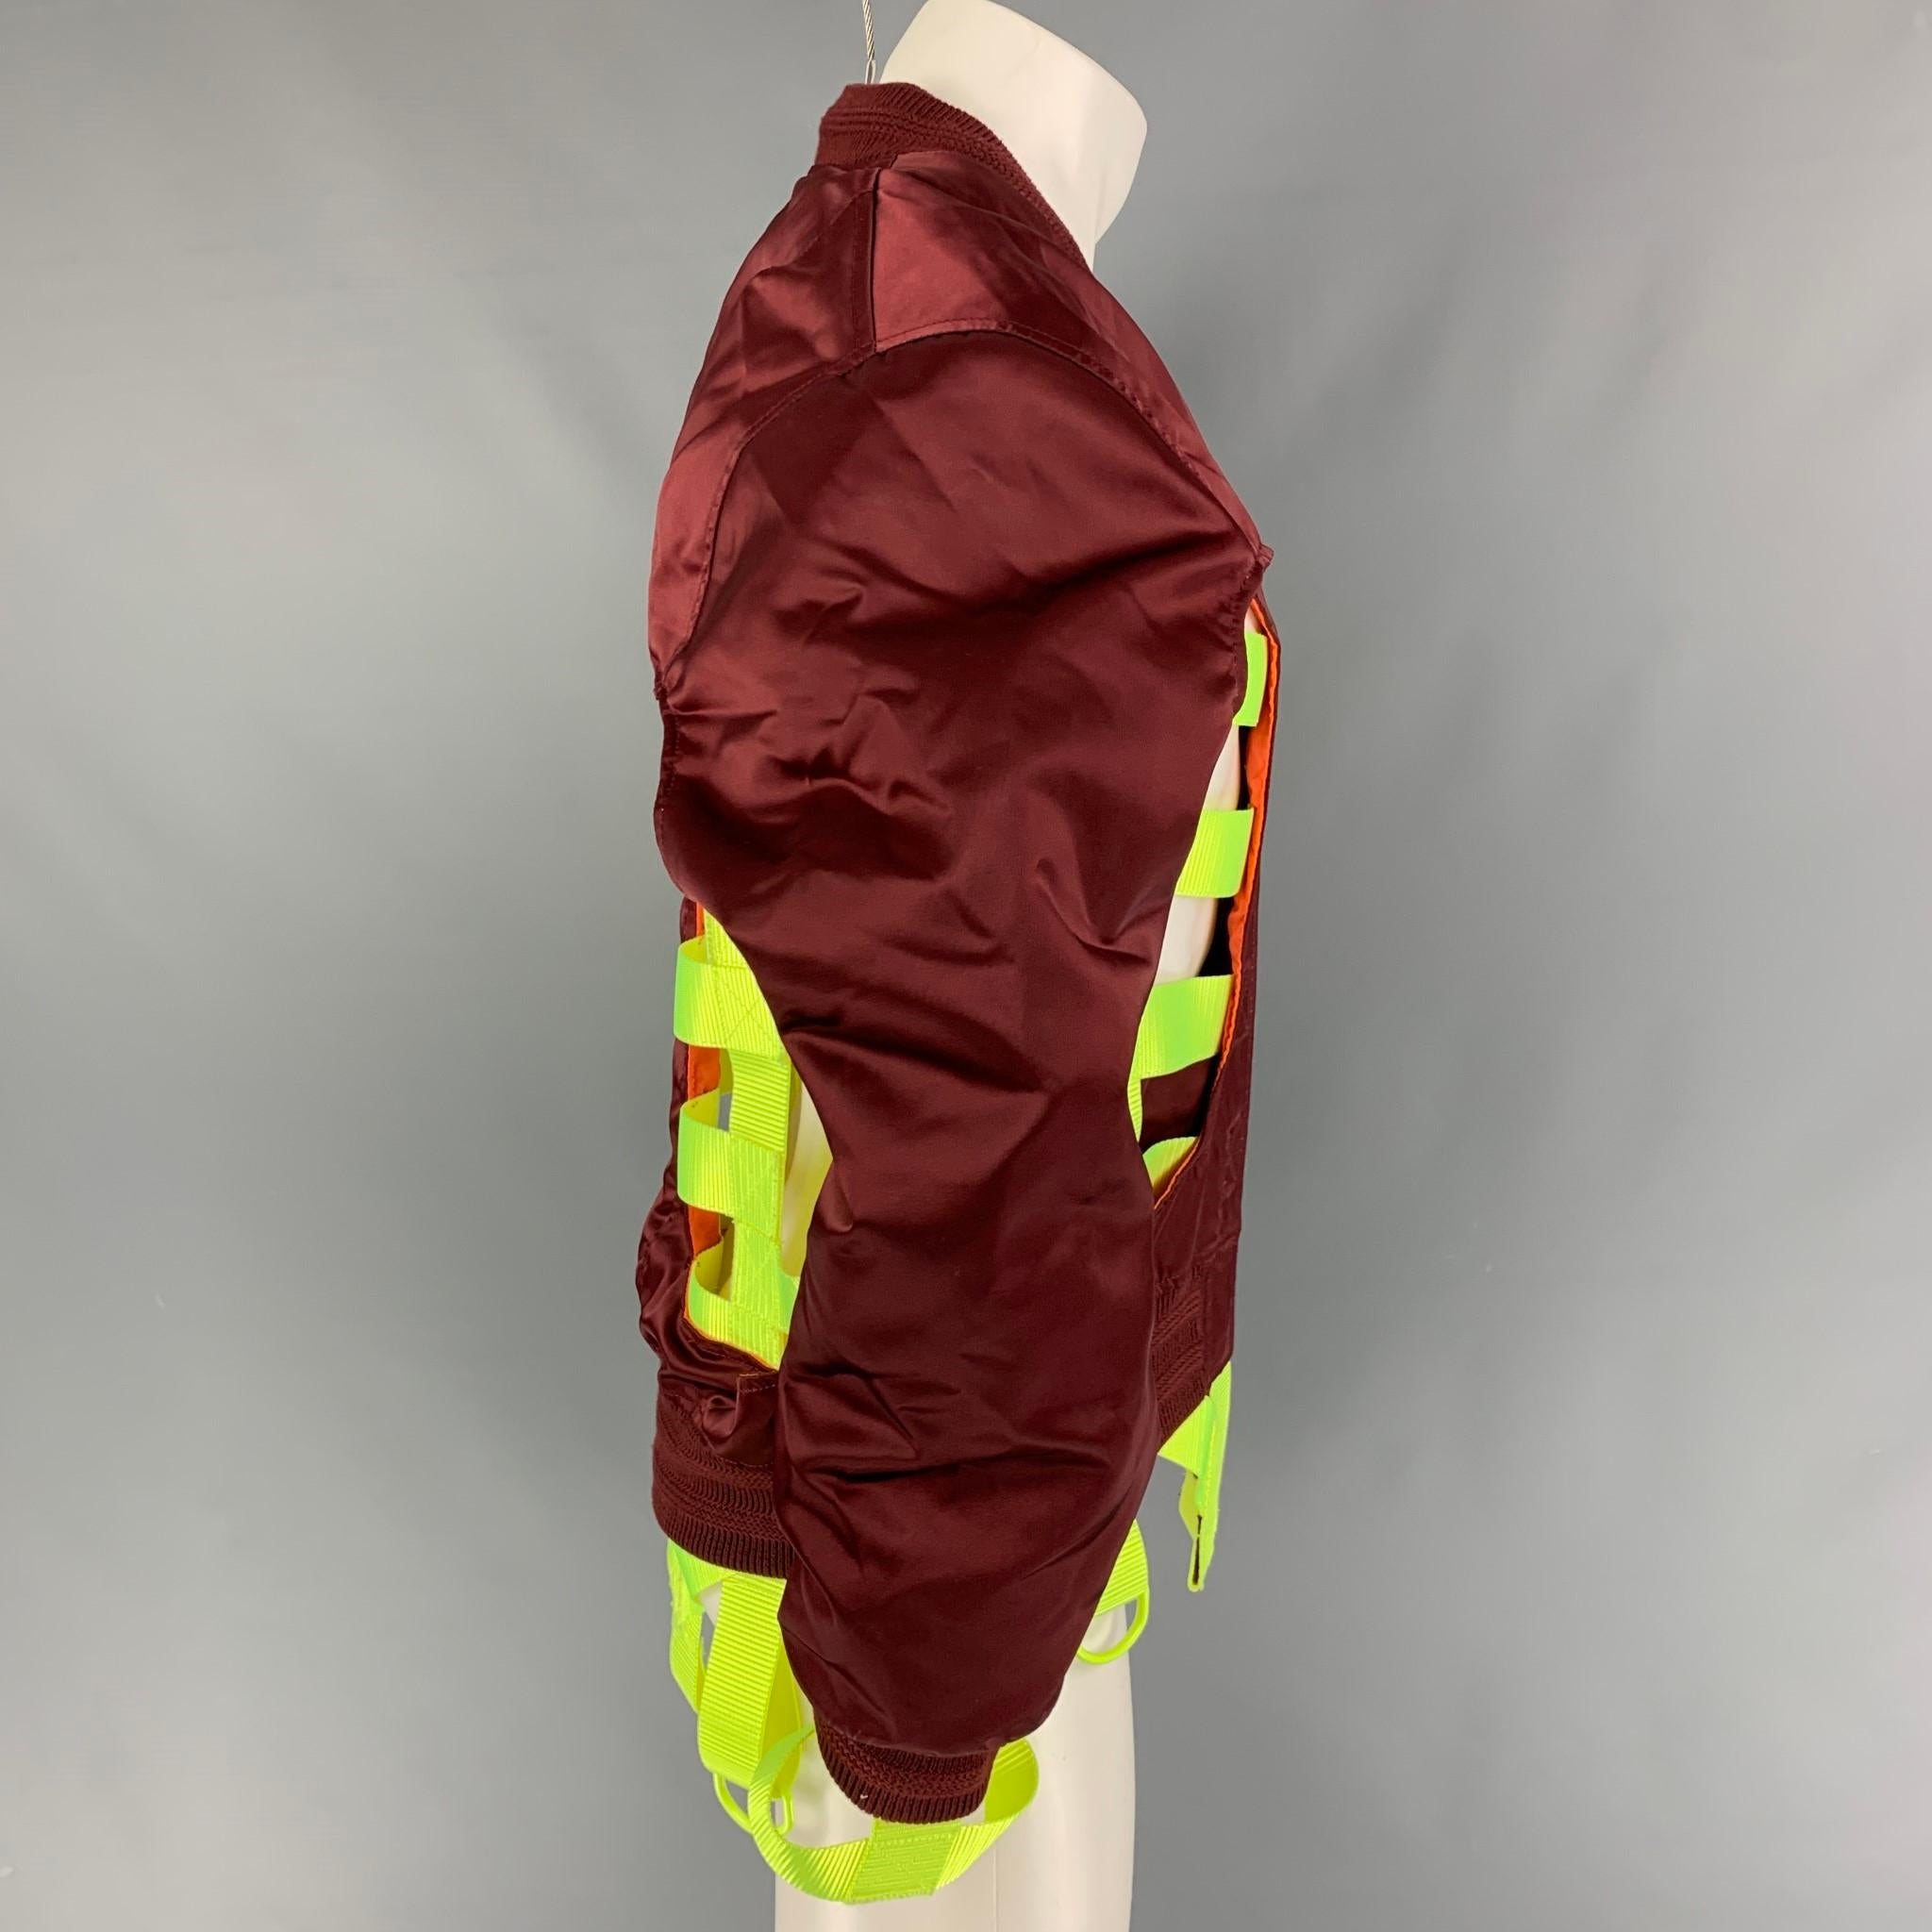 lightspeed rescue jacket